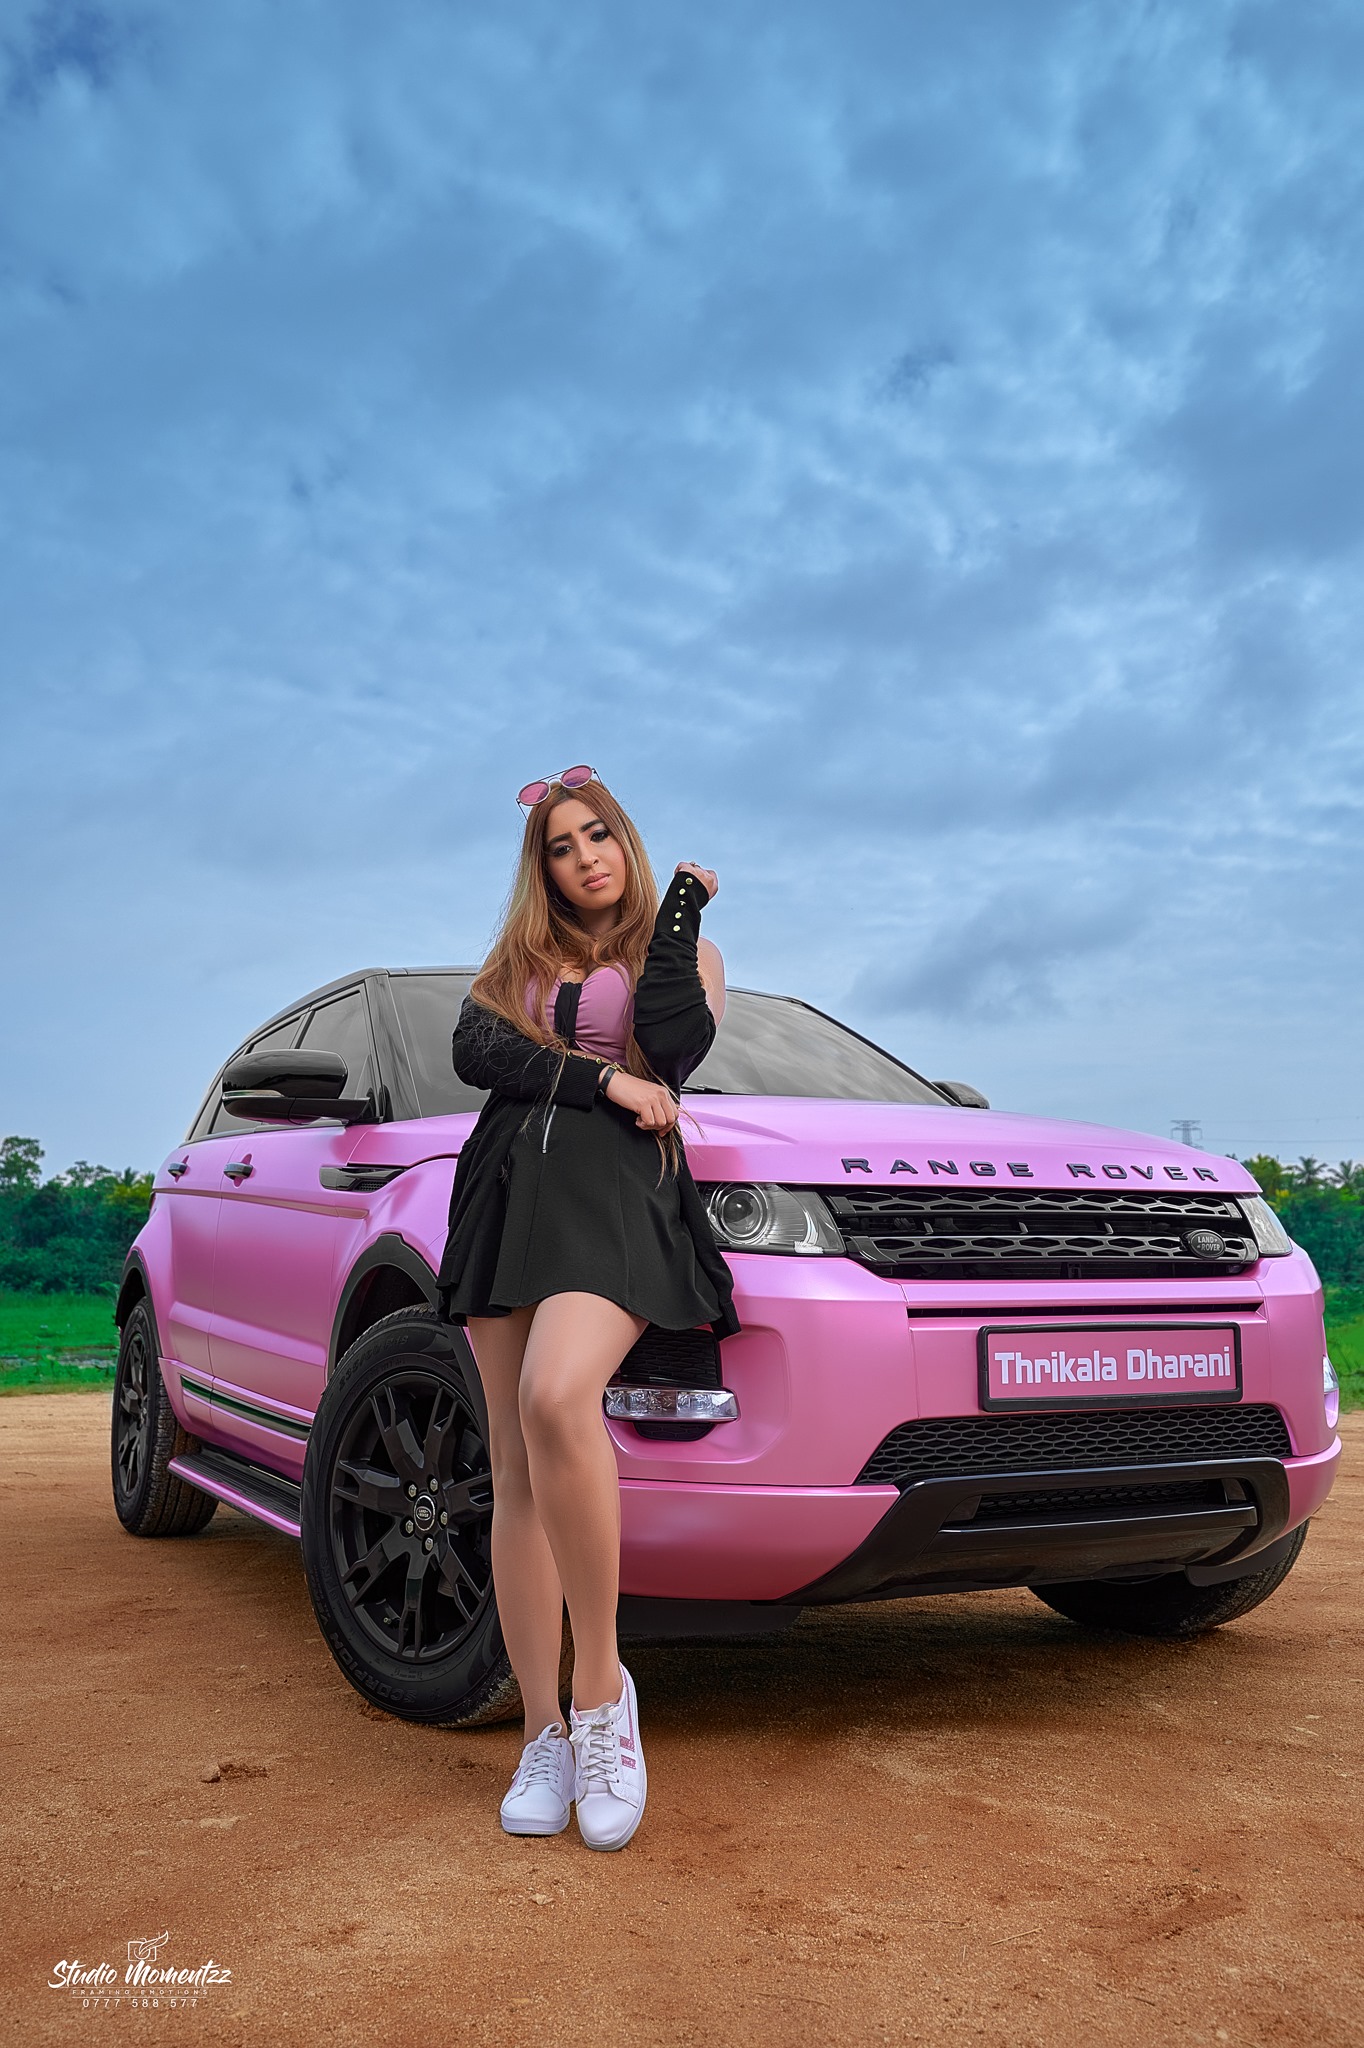 Thrikala Dharani with Her  Pink Range Rover